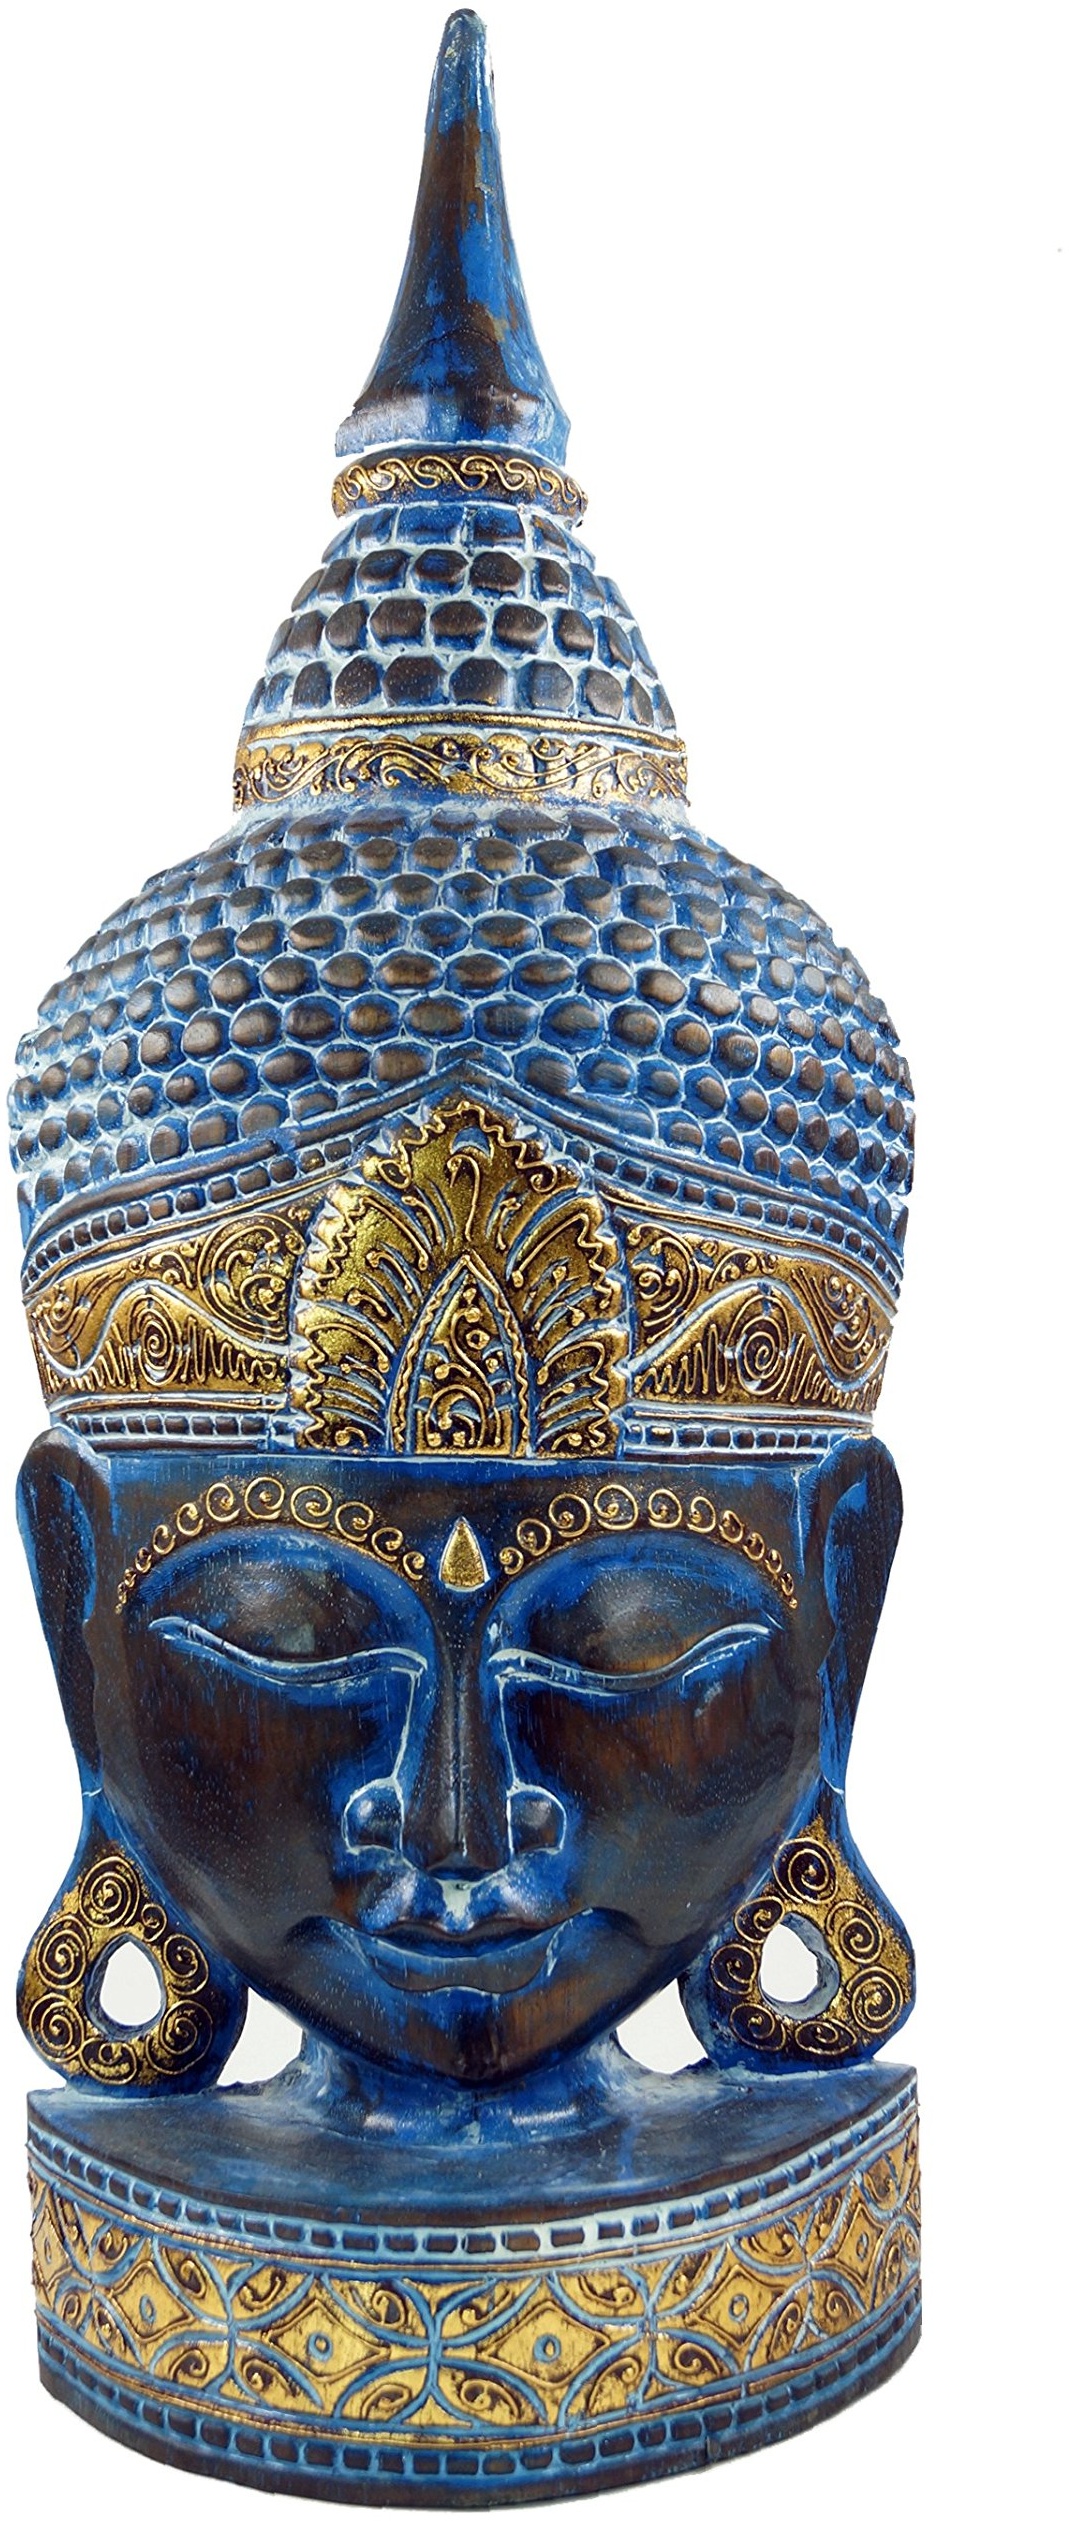 GURU SHOP Stehende Buddha Maske, Thai Buddha Statue - Blau/Gold, 74x27x13 cm, Buddhas